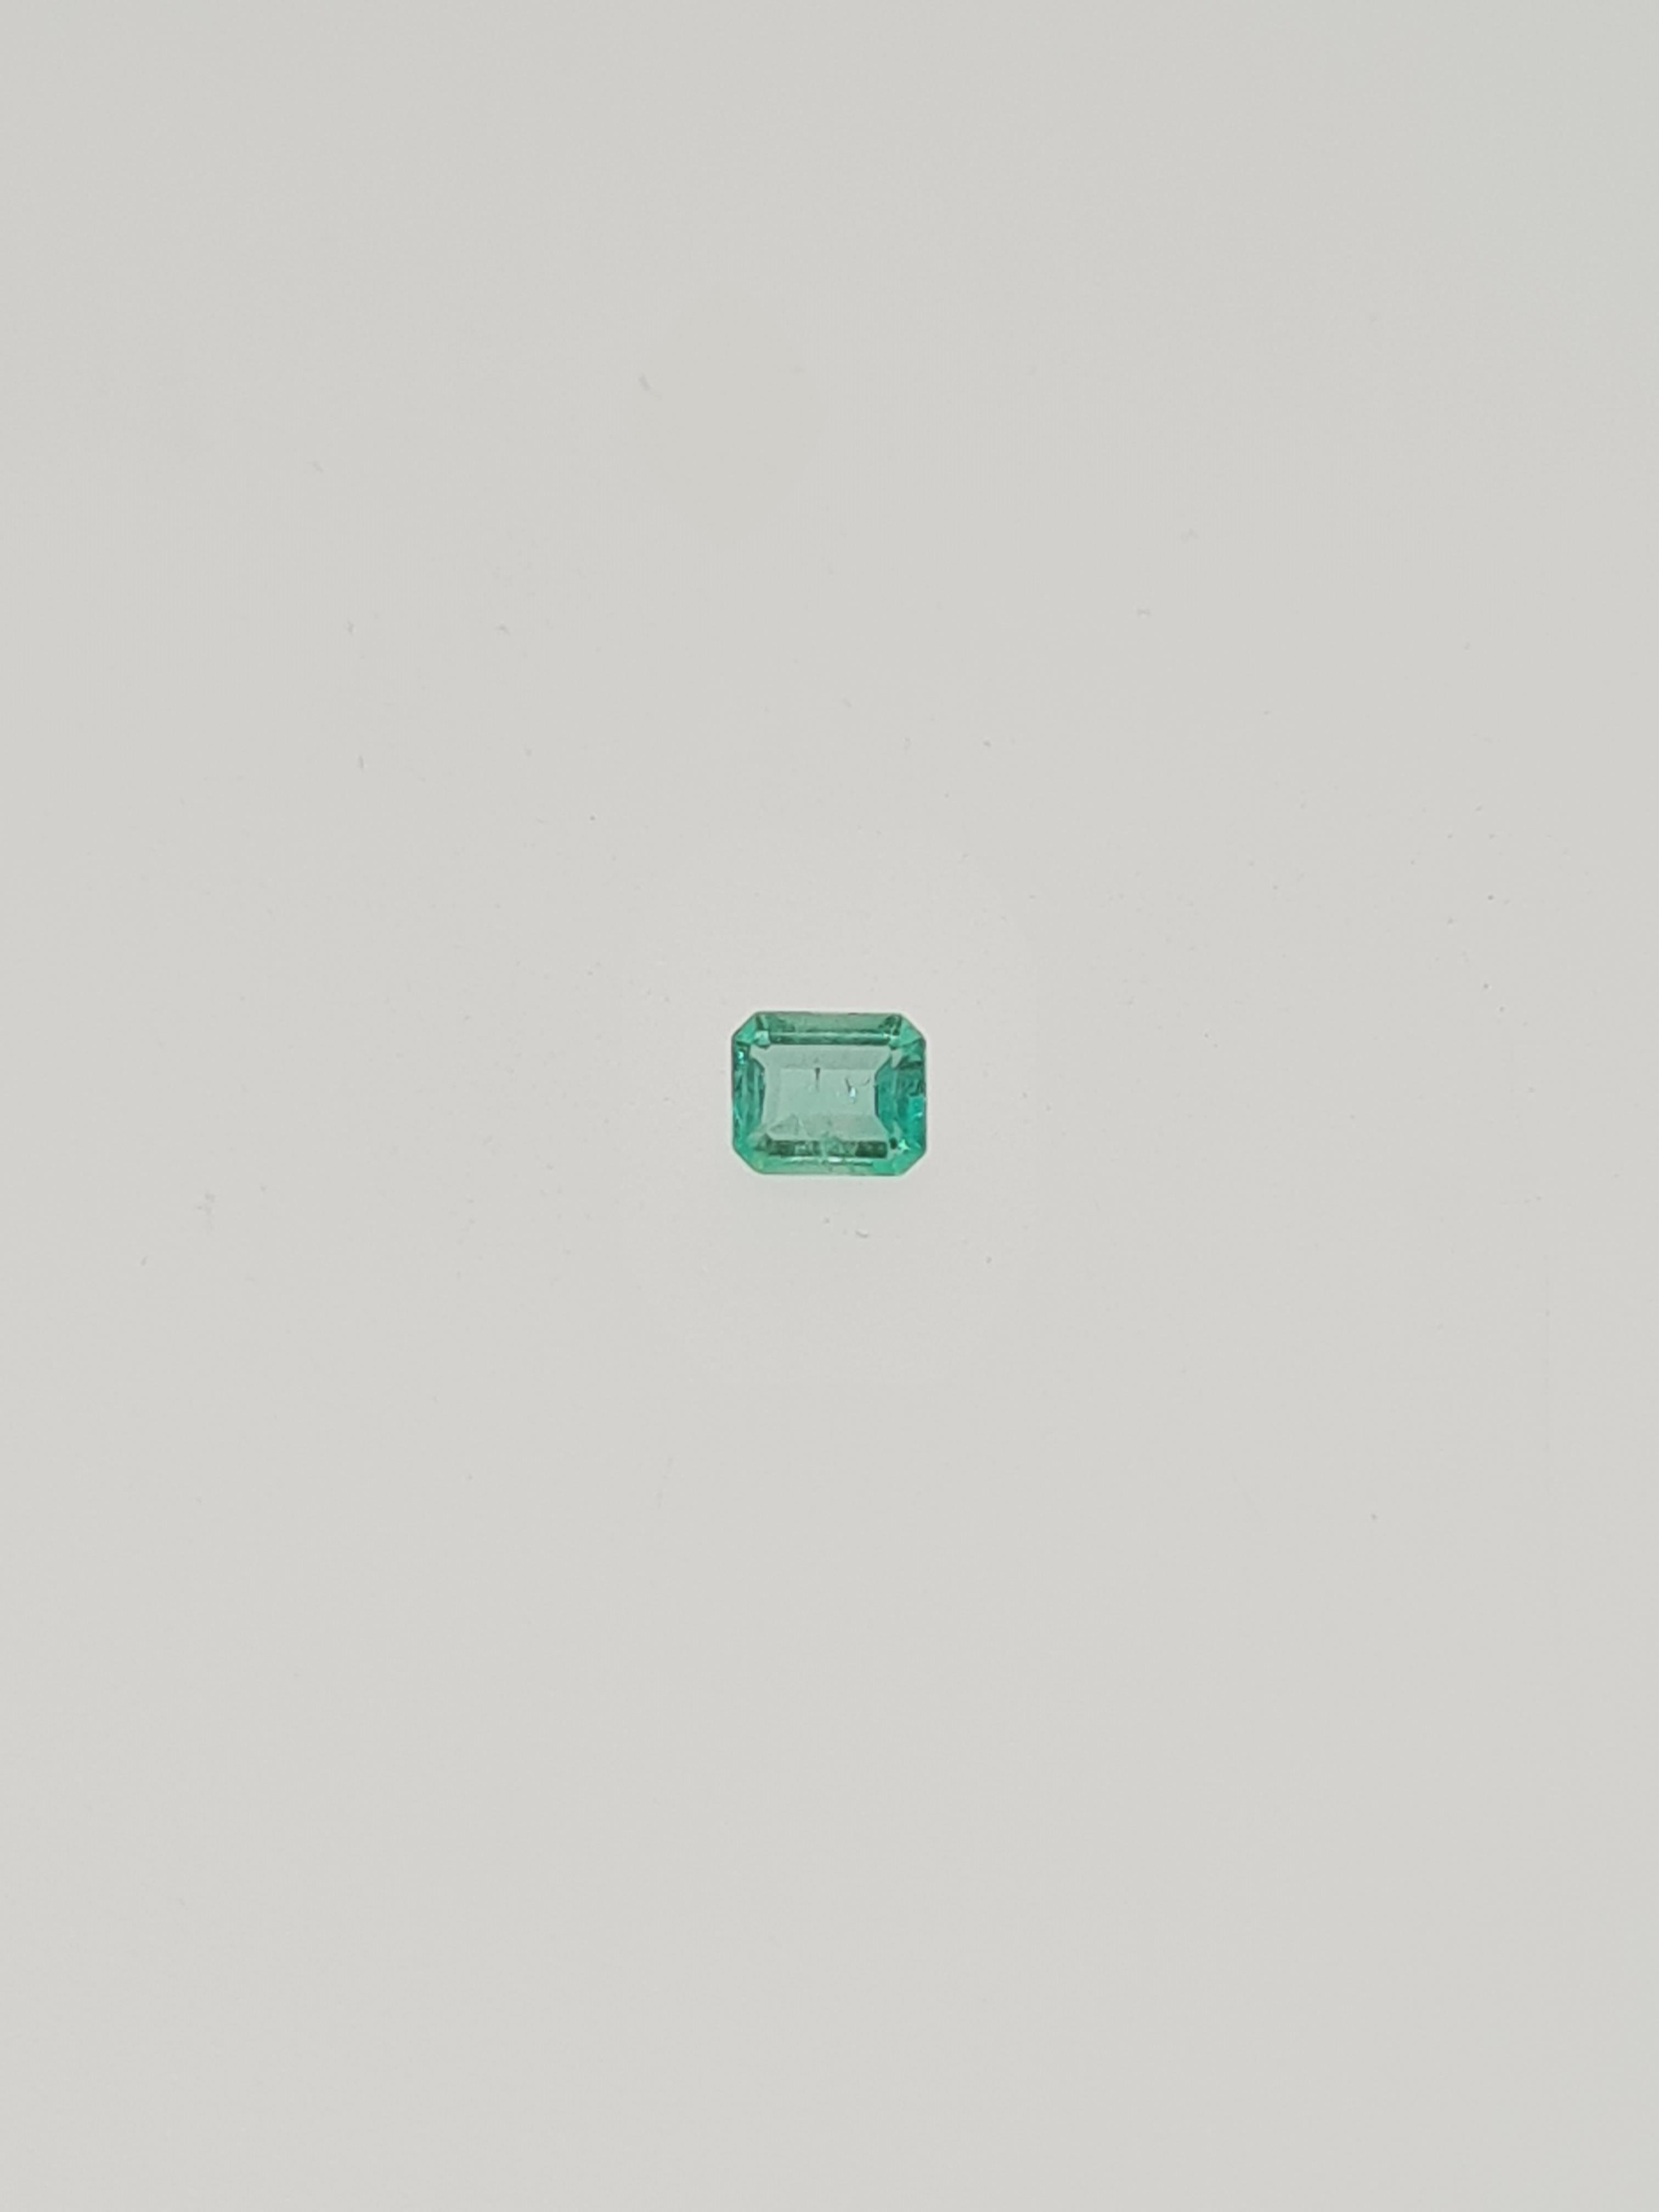 Emerald step cut gem stone - Image 5 of 5